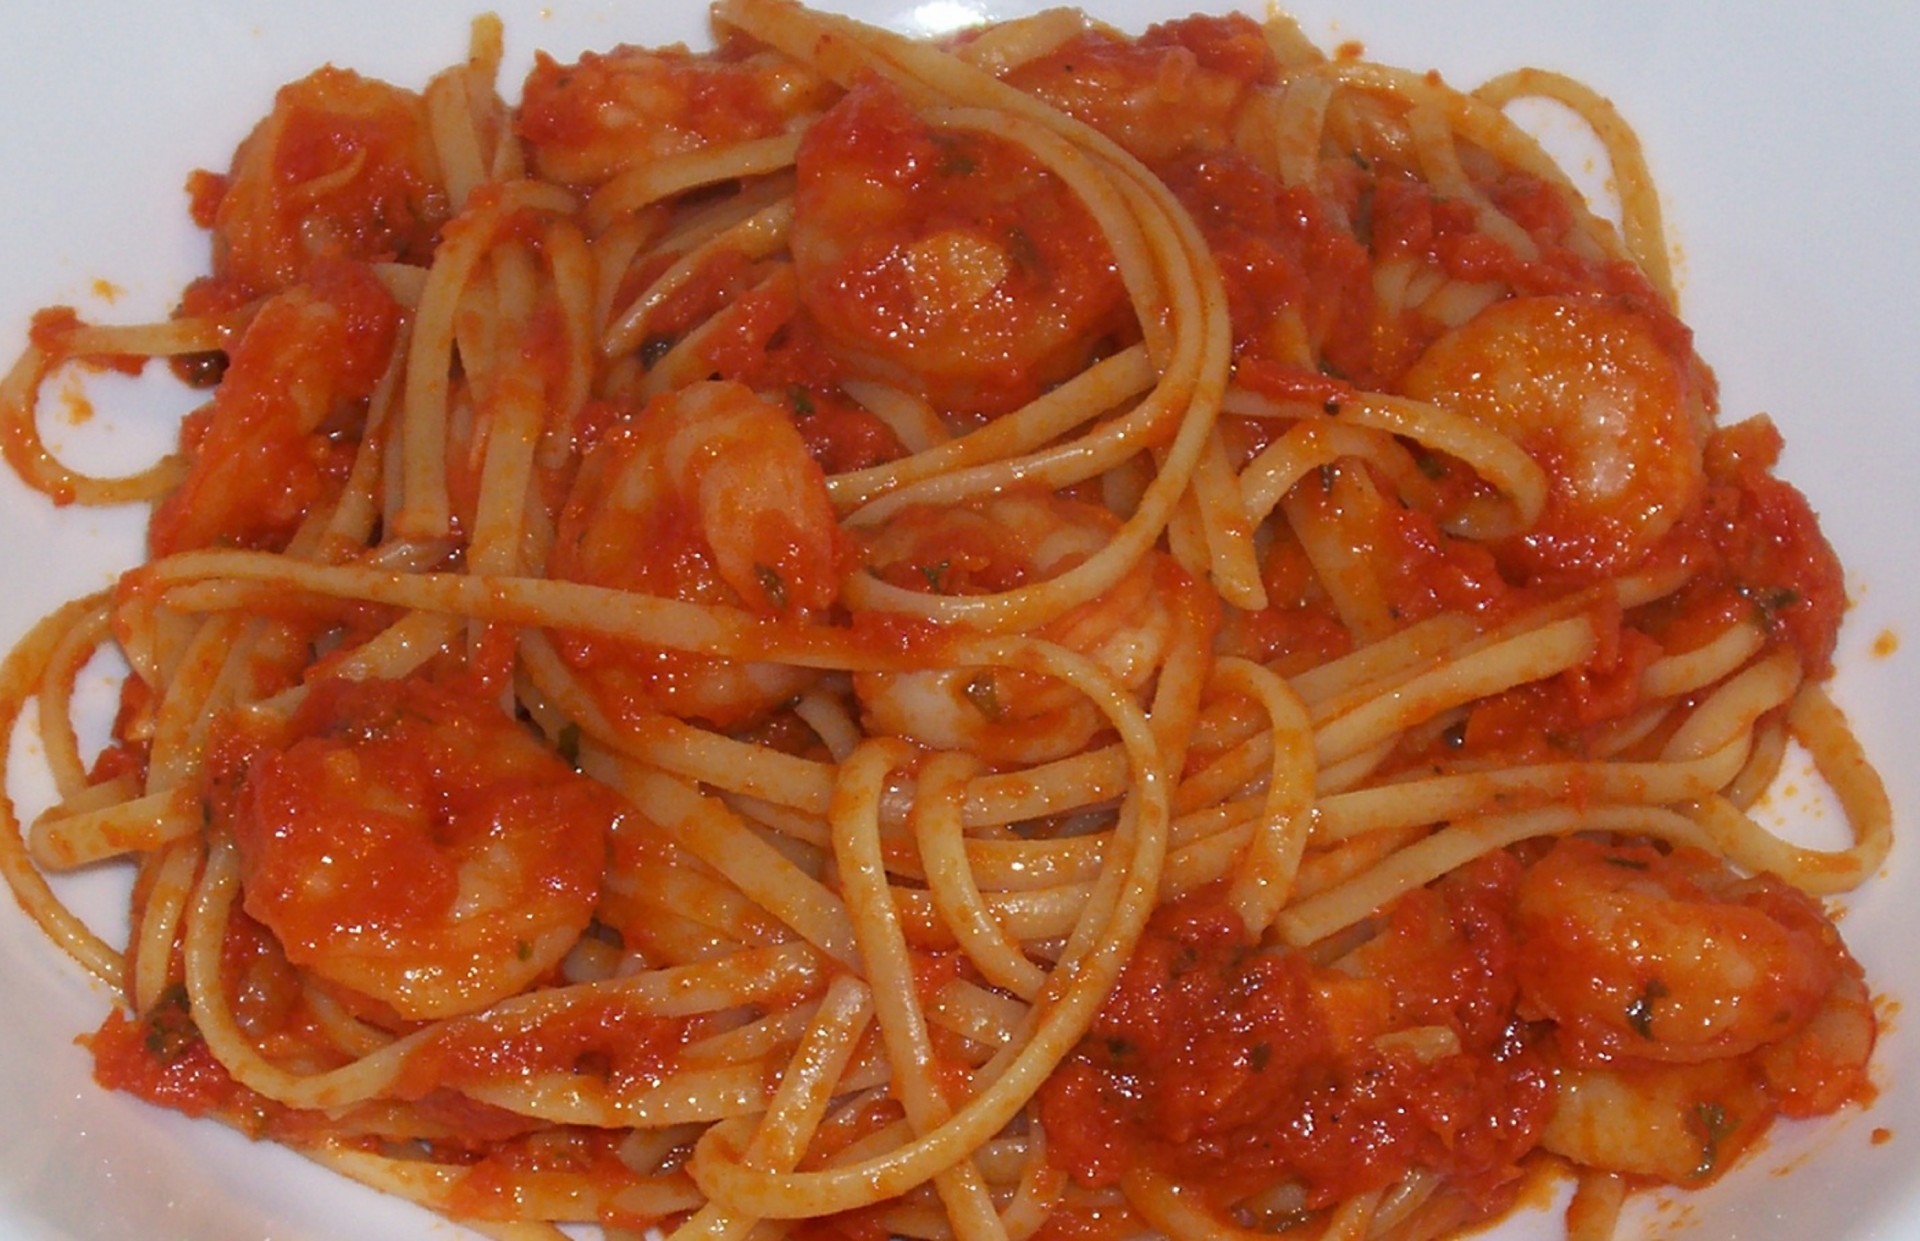 Shrimp Italiano over Linguine